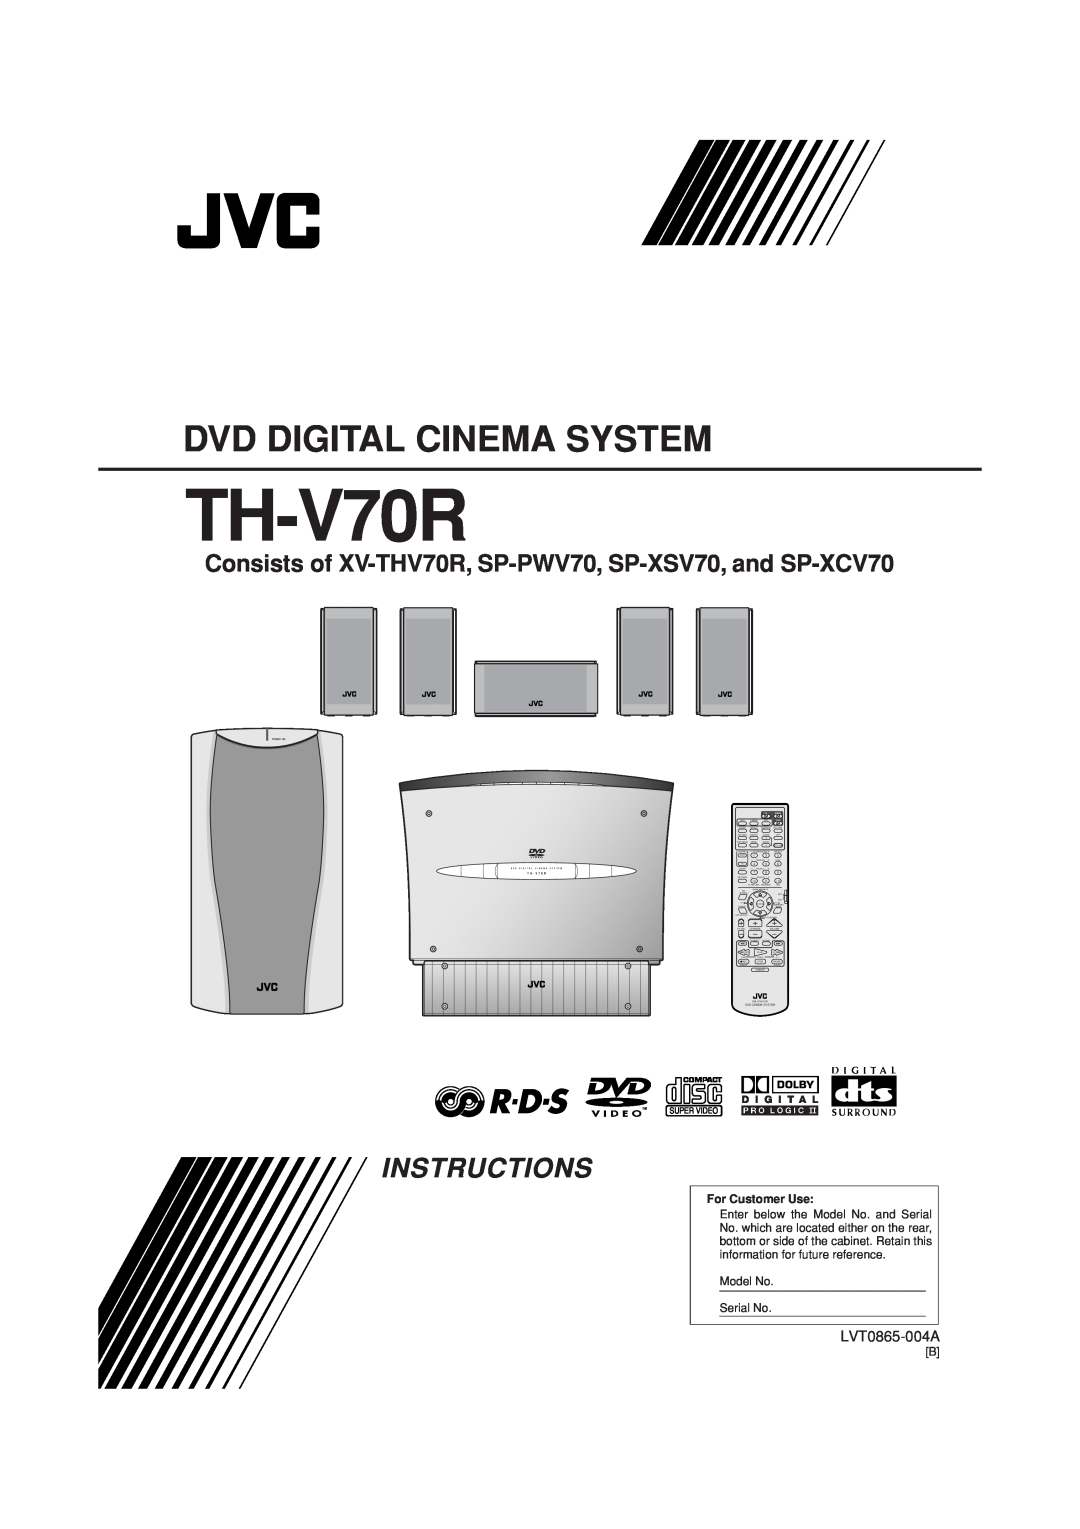 JVC LVT0865-004A, XV-THV70R manual TH-V70R, Dvd Digital Cinema System, Instructions, For Customer Use, Model No Serial No 